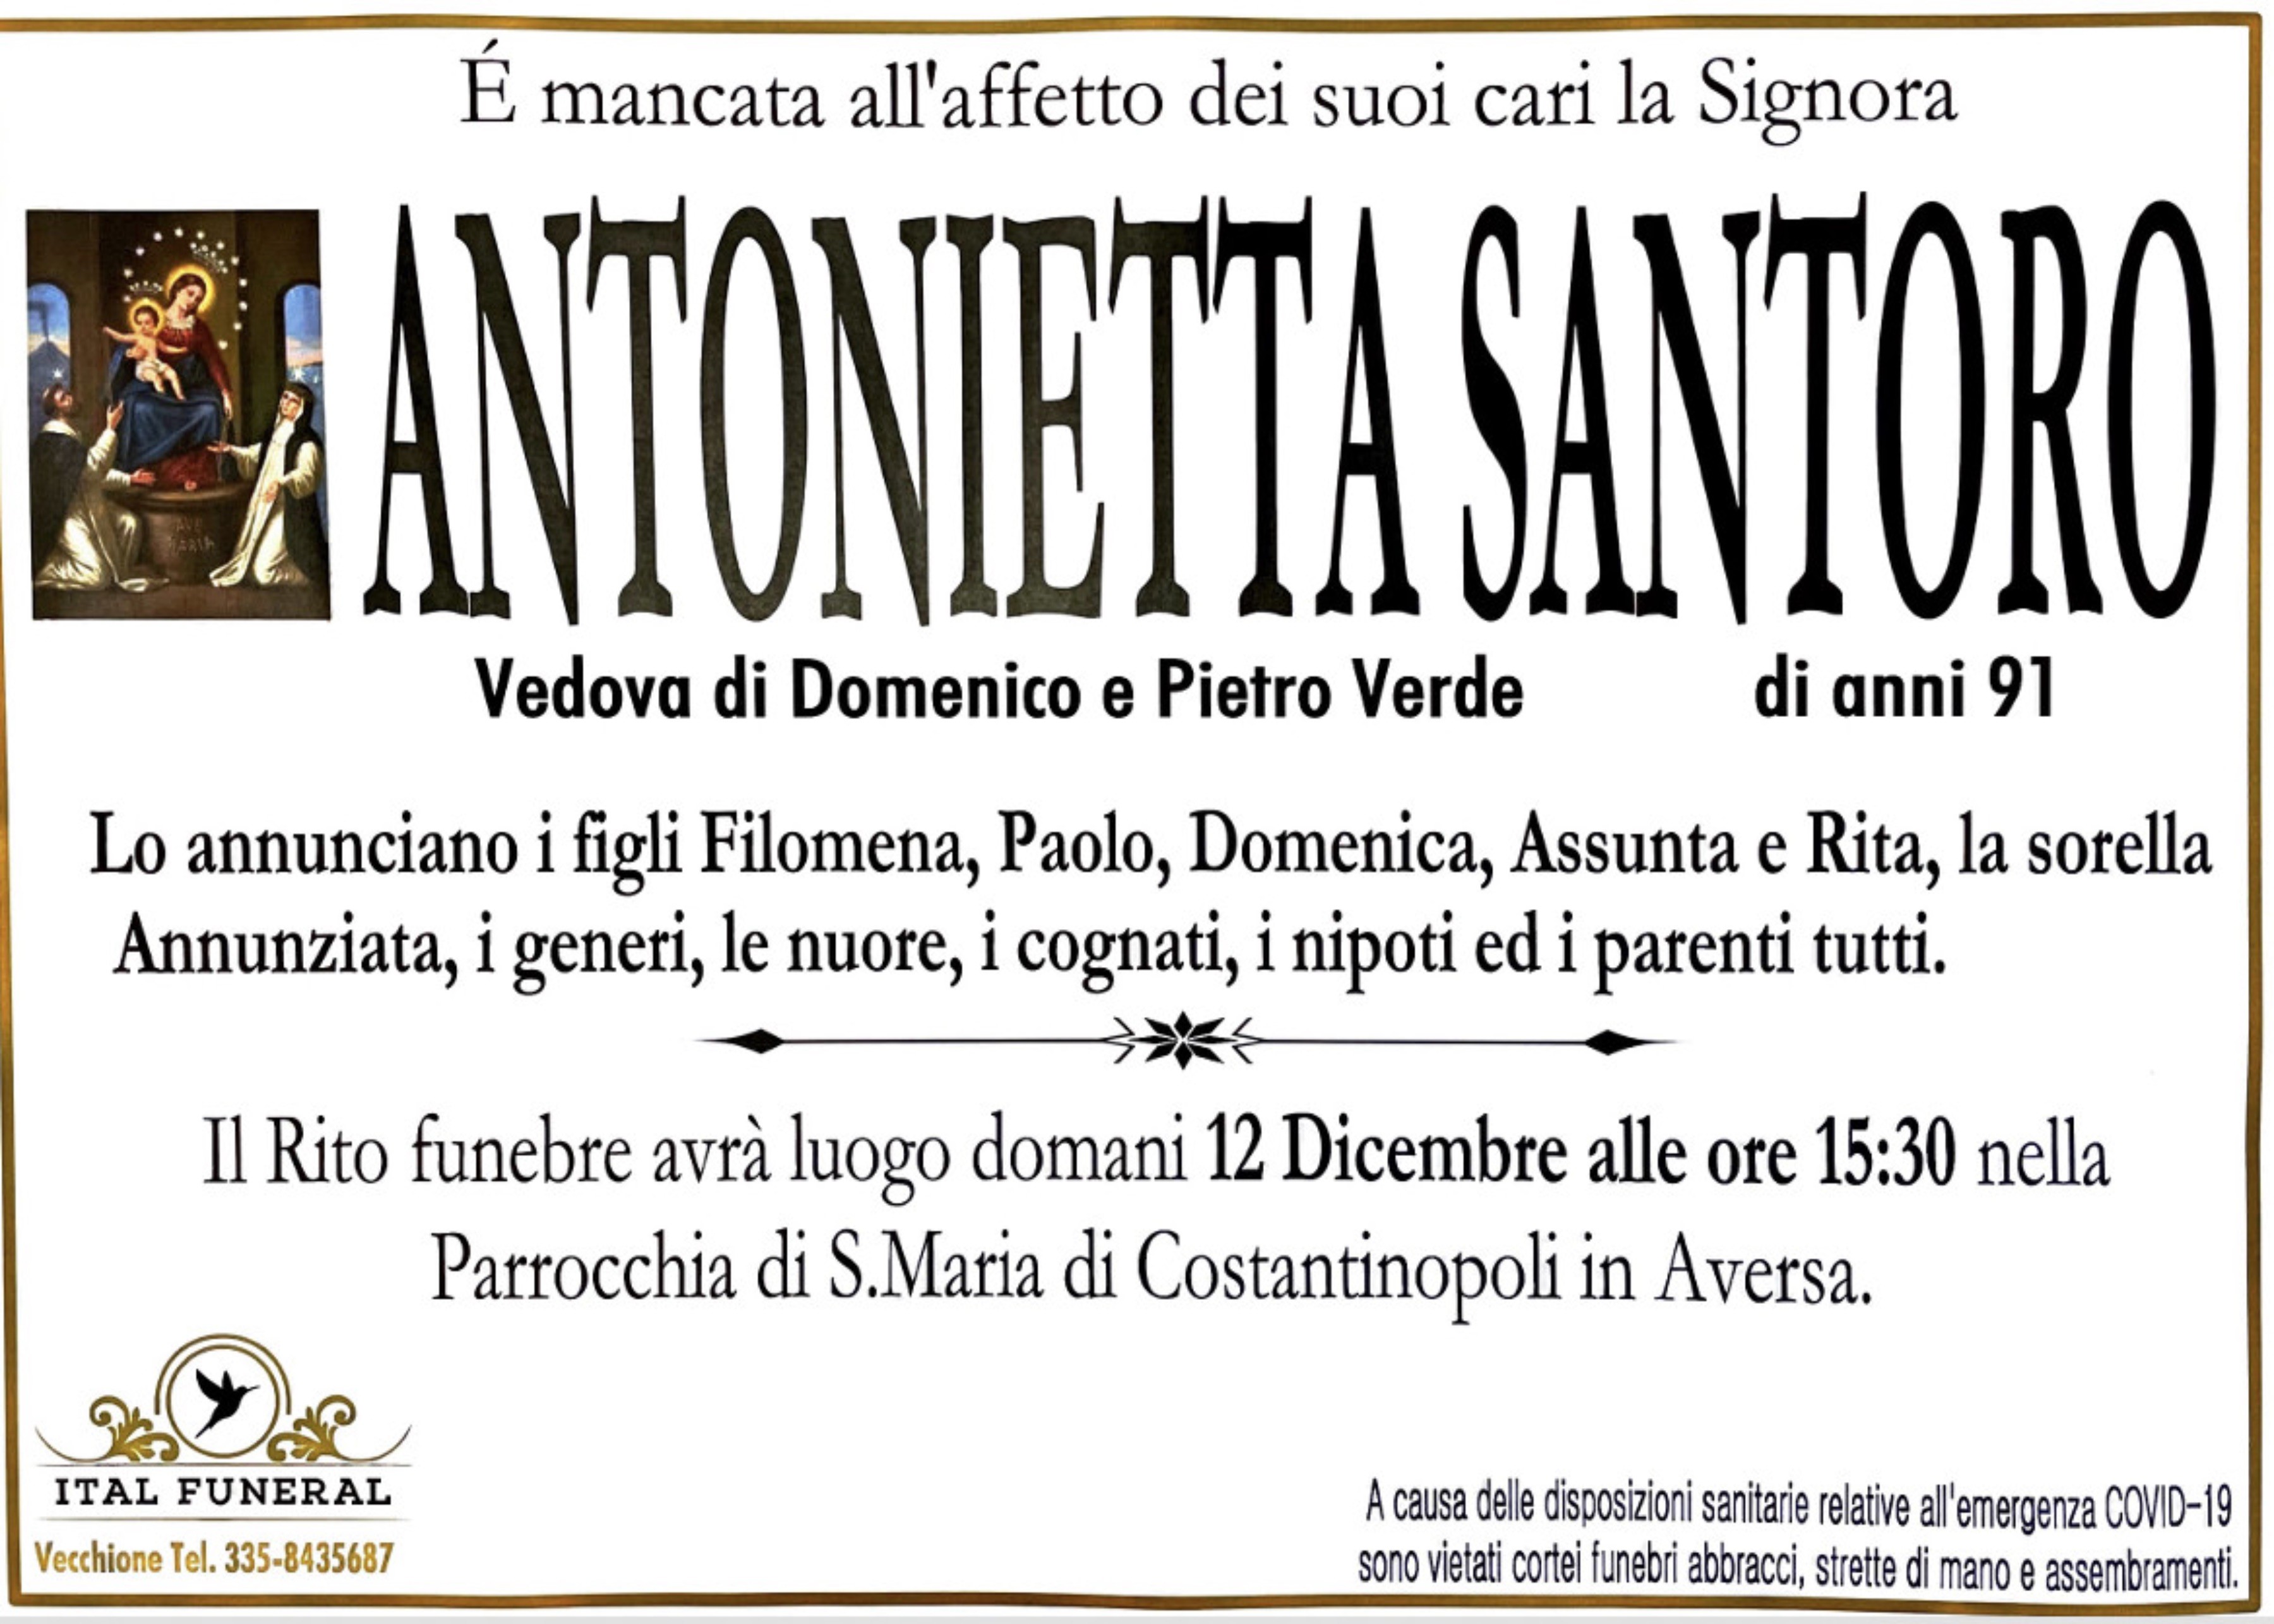 Antonietta Santoro